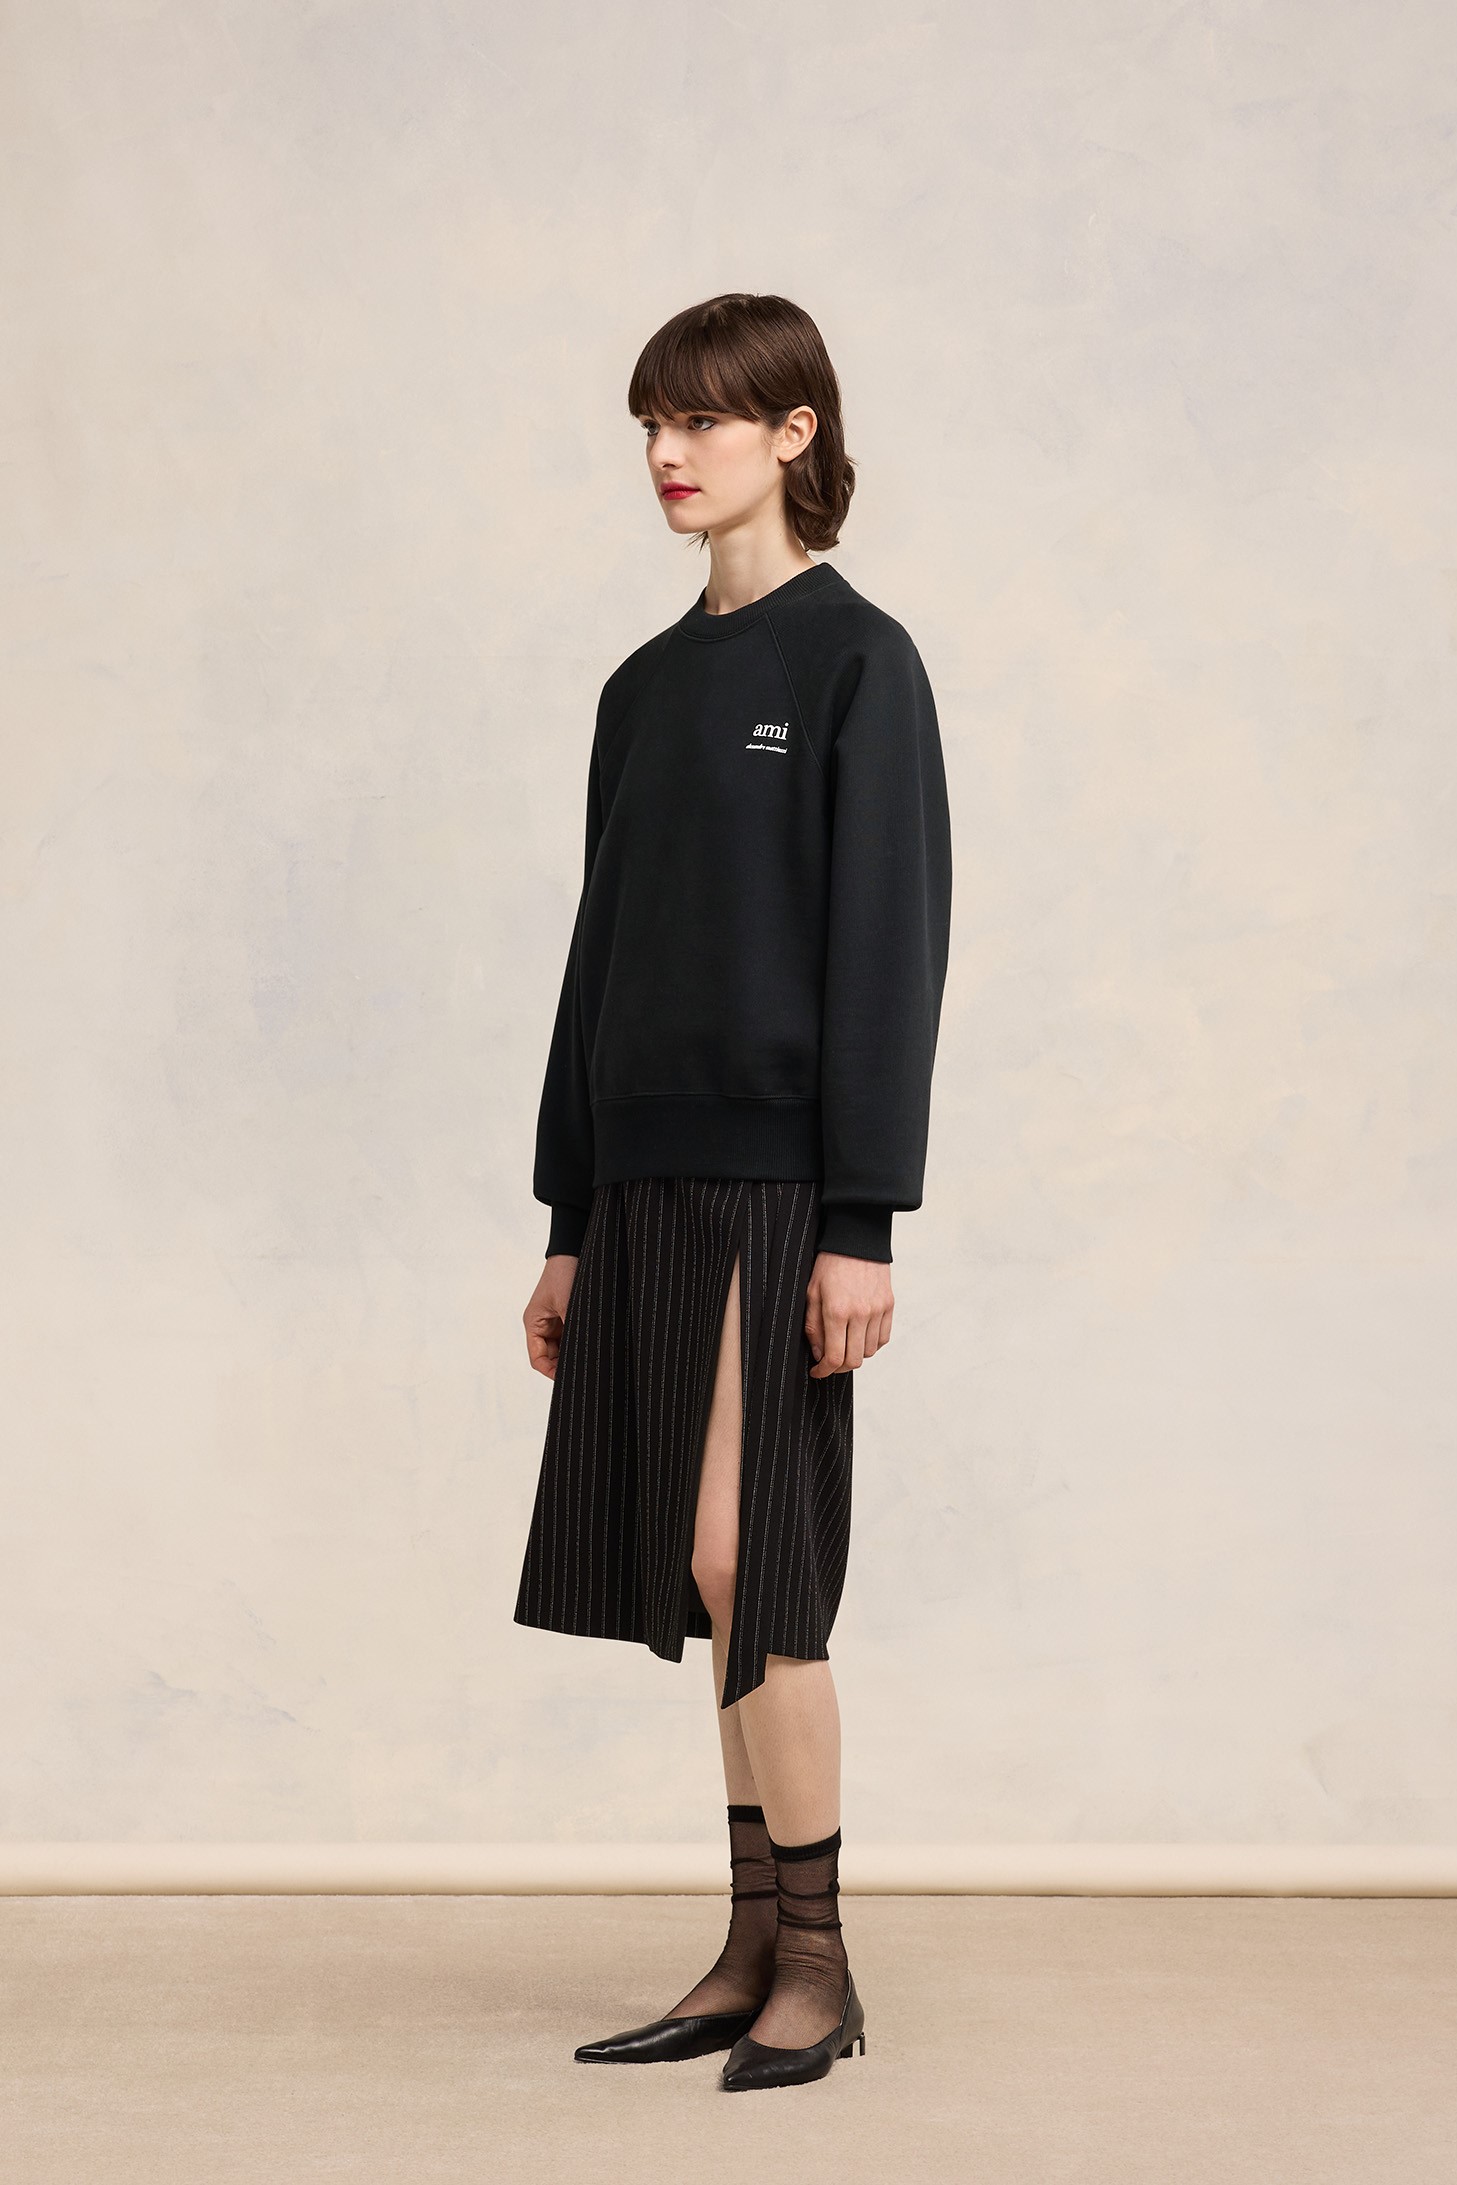 AMI PARIS Alexandre Mattiussi Sweatshirt in Black S